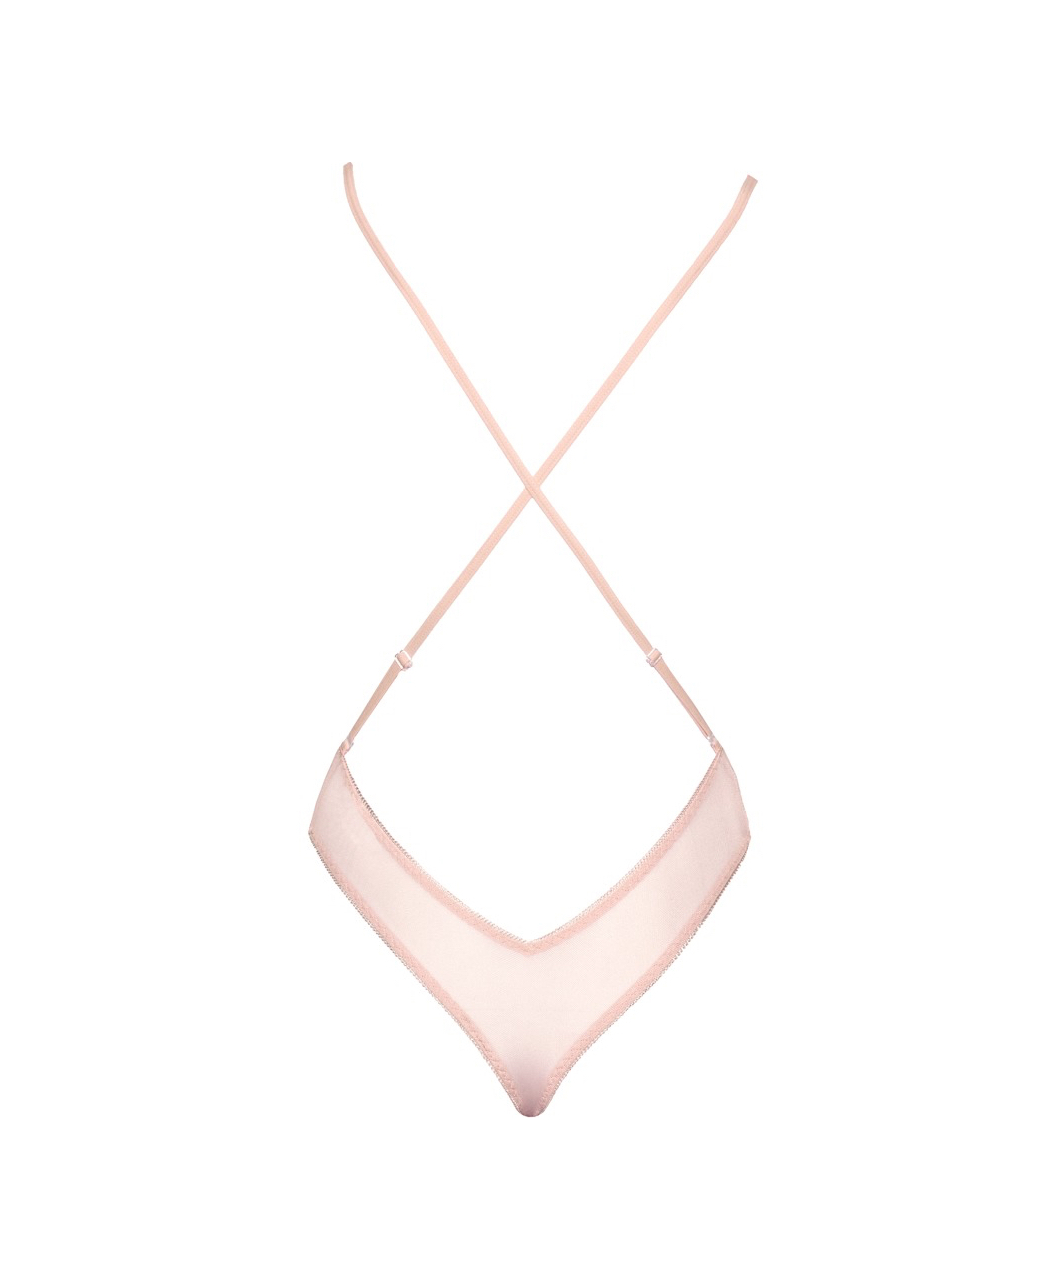 kissable Sinuous розовый прозрачный боди